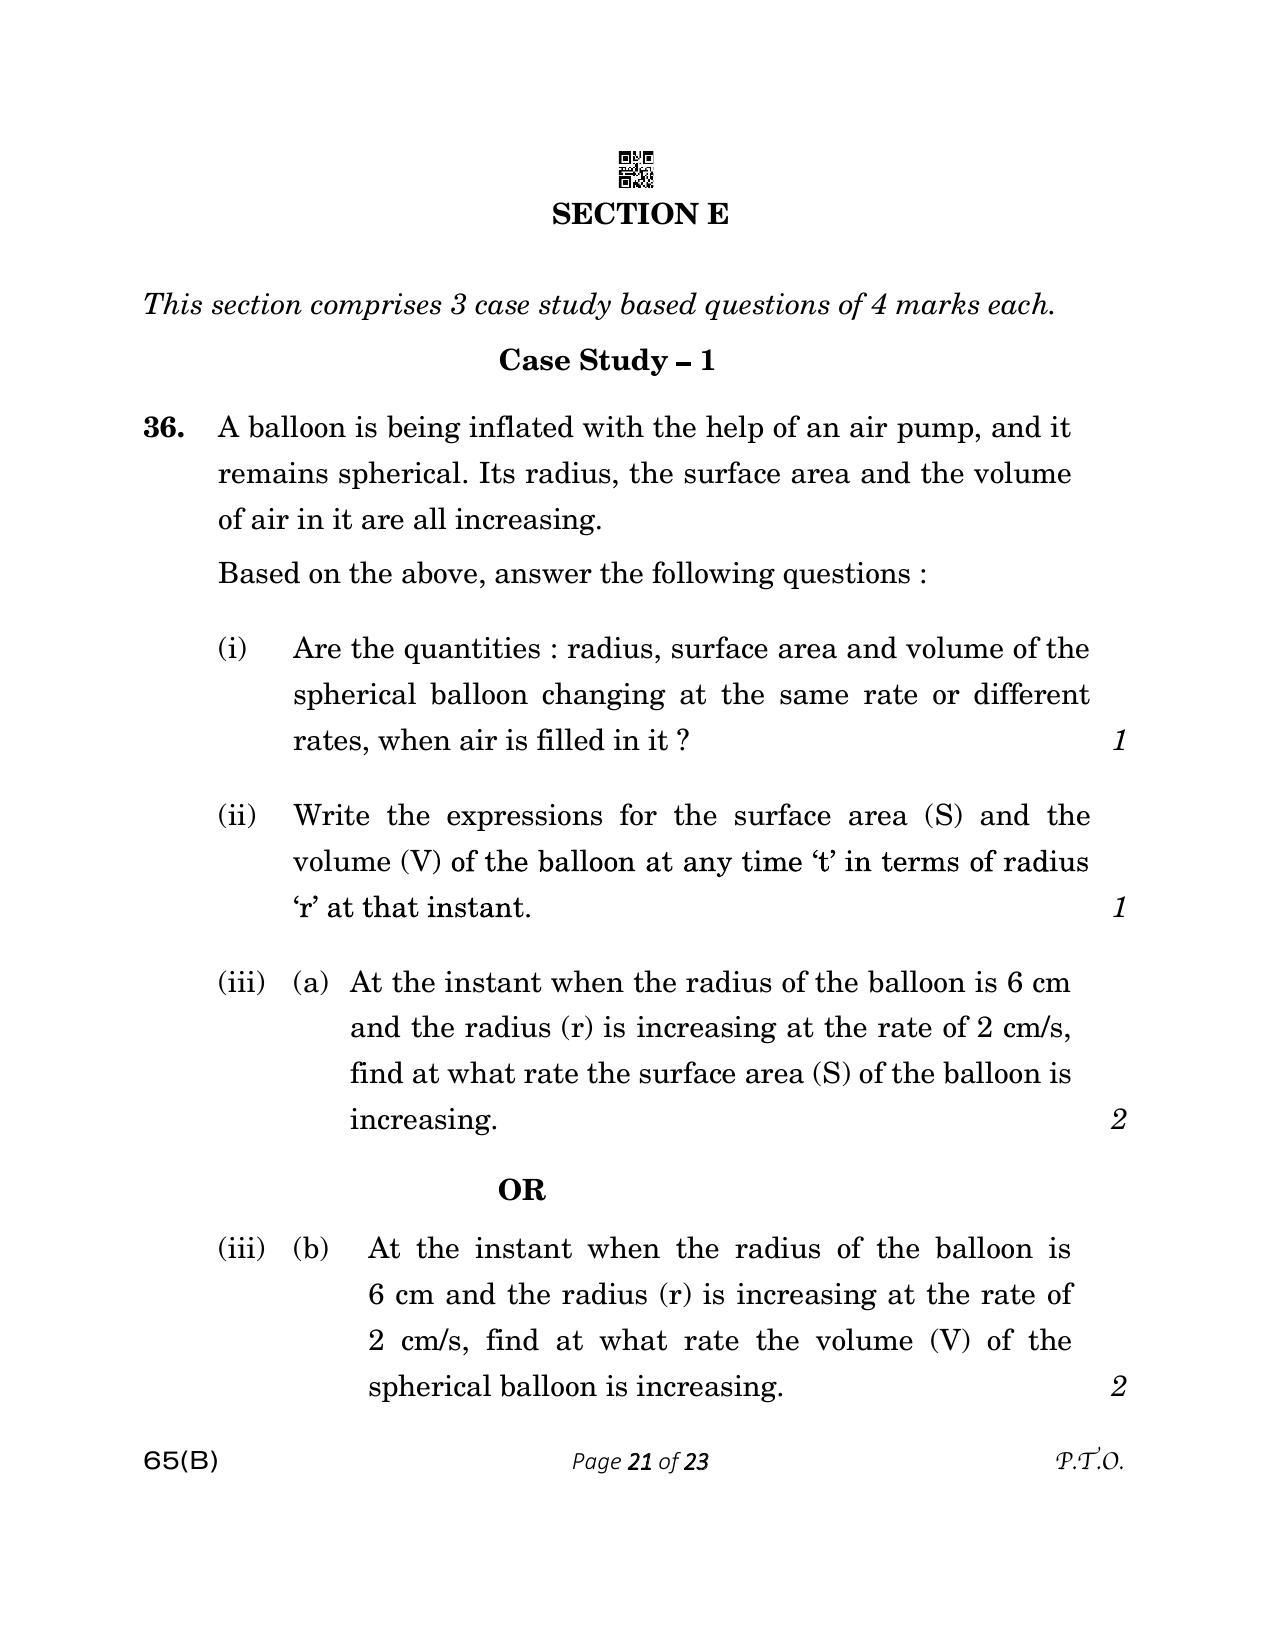 CBSE Class 12 65(B) MATHEMATICS FOR VI 2023 Question Paper - Page 21